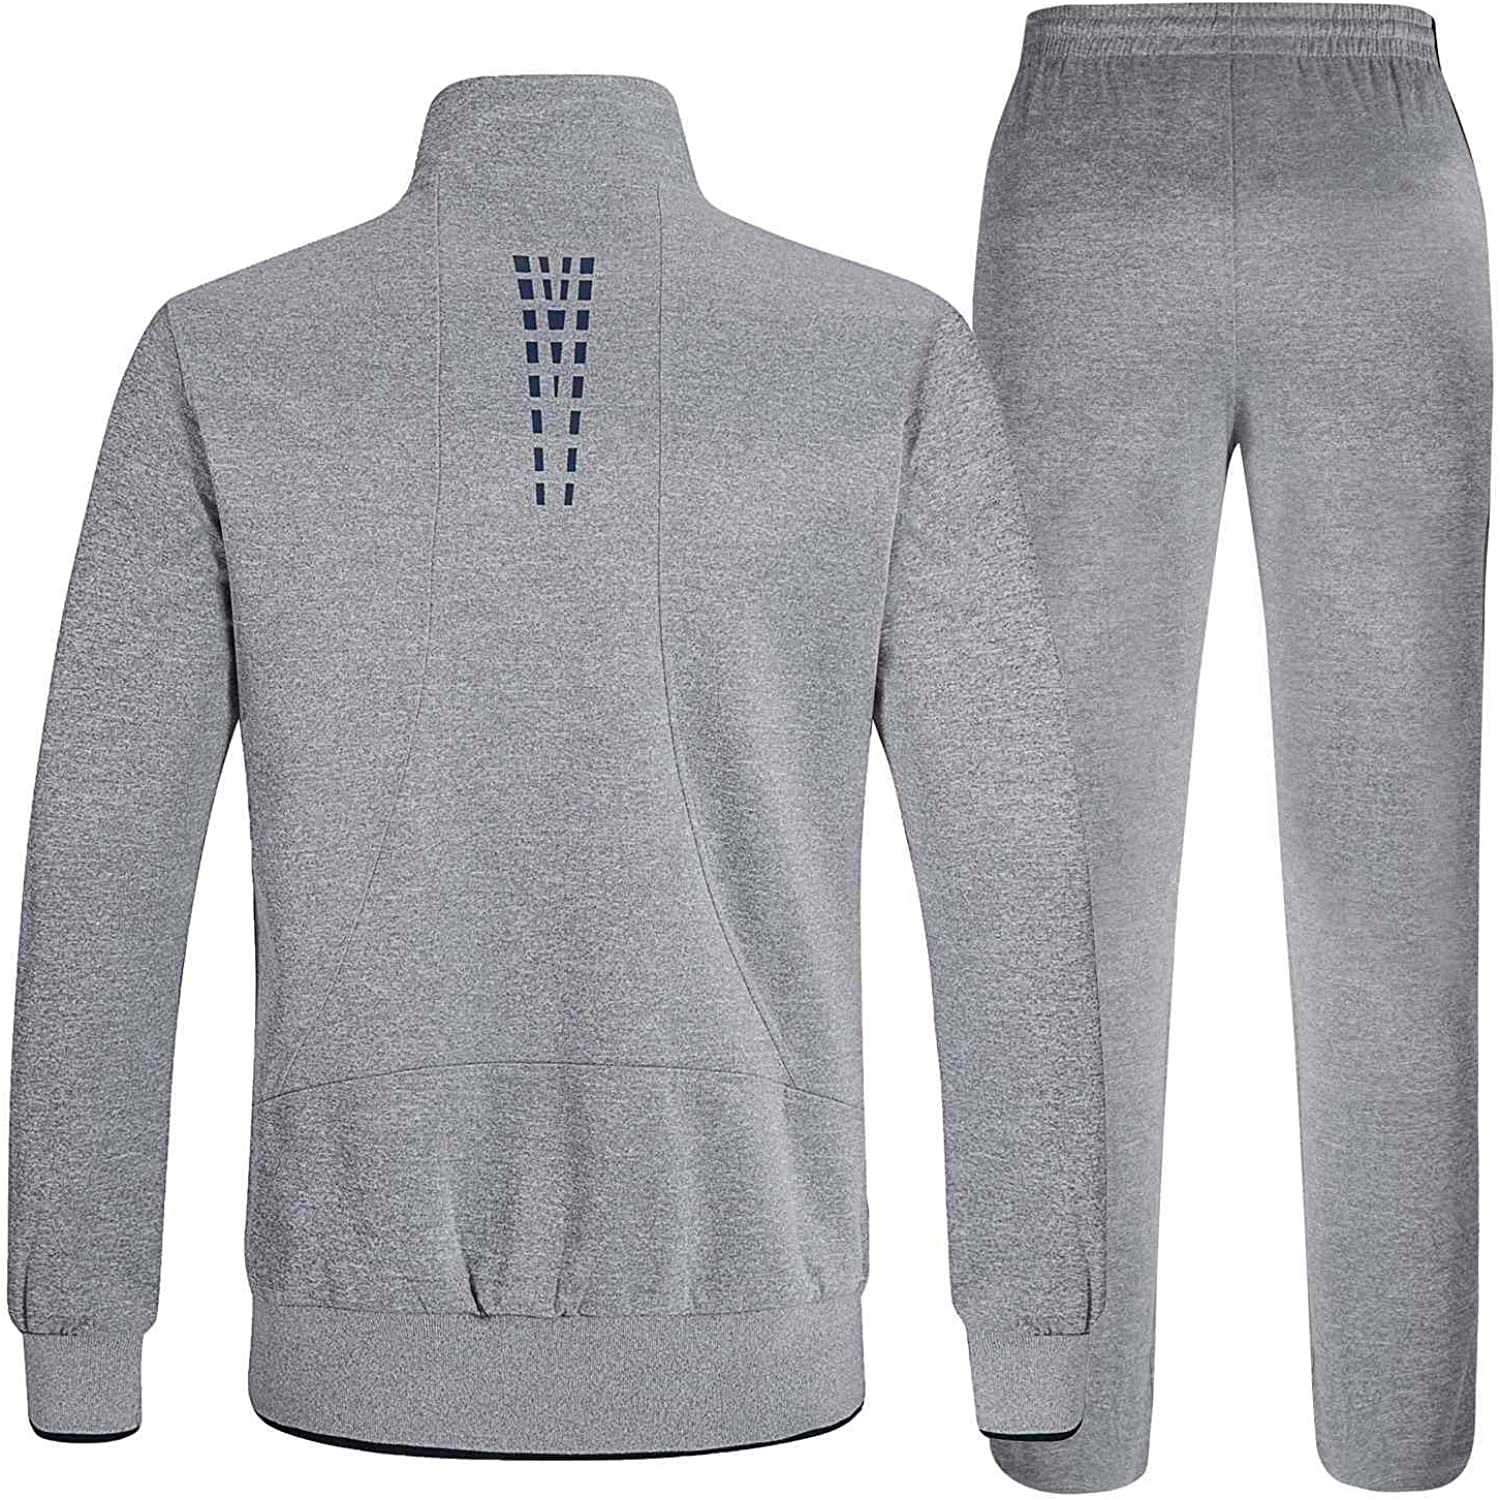 Coofandy Men S Tracksuit 2 Piece Full Zip Athletic Sweatsuits Casual Running Jogging Sport Suit